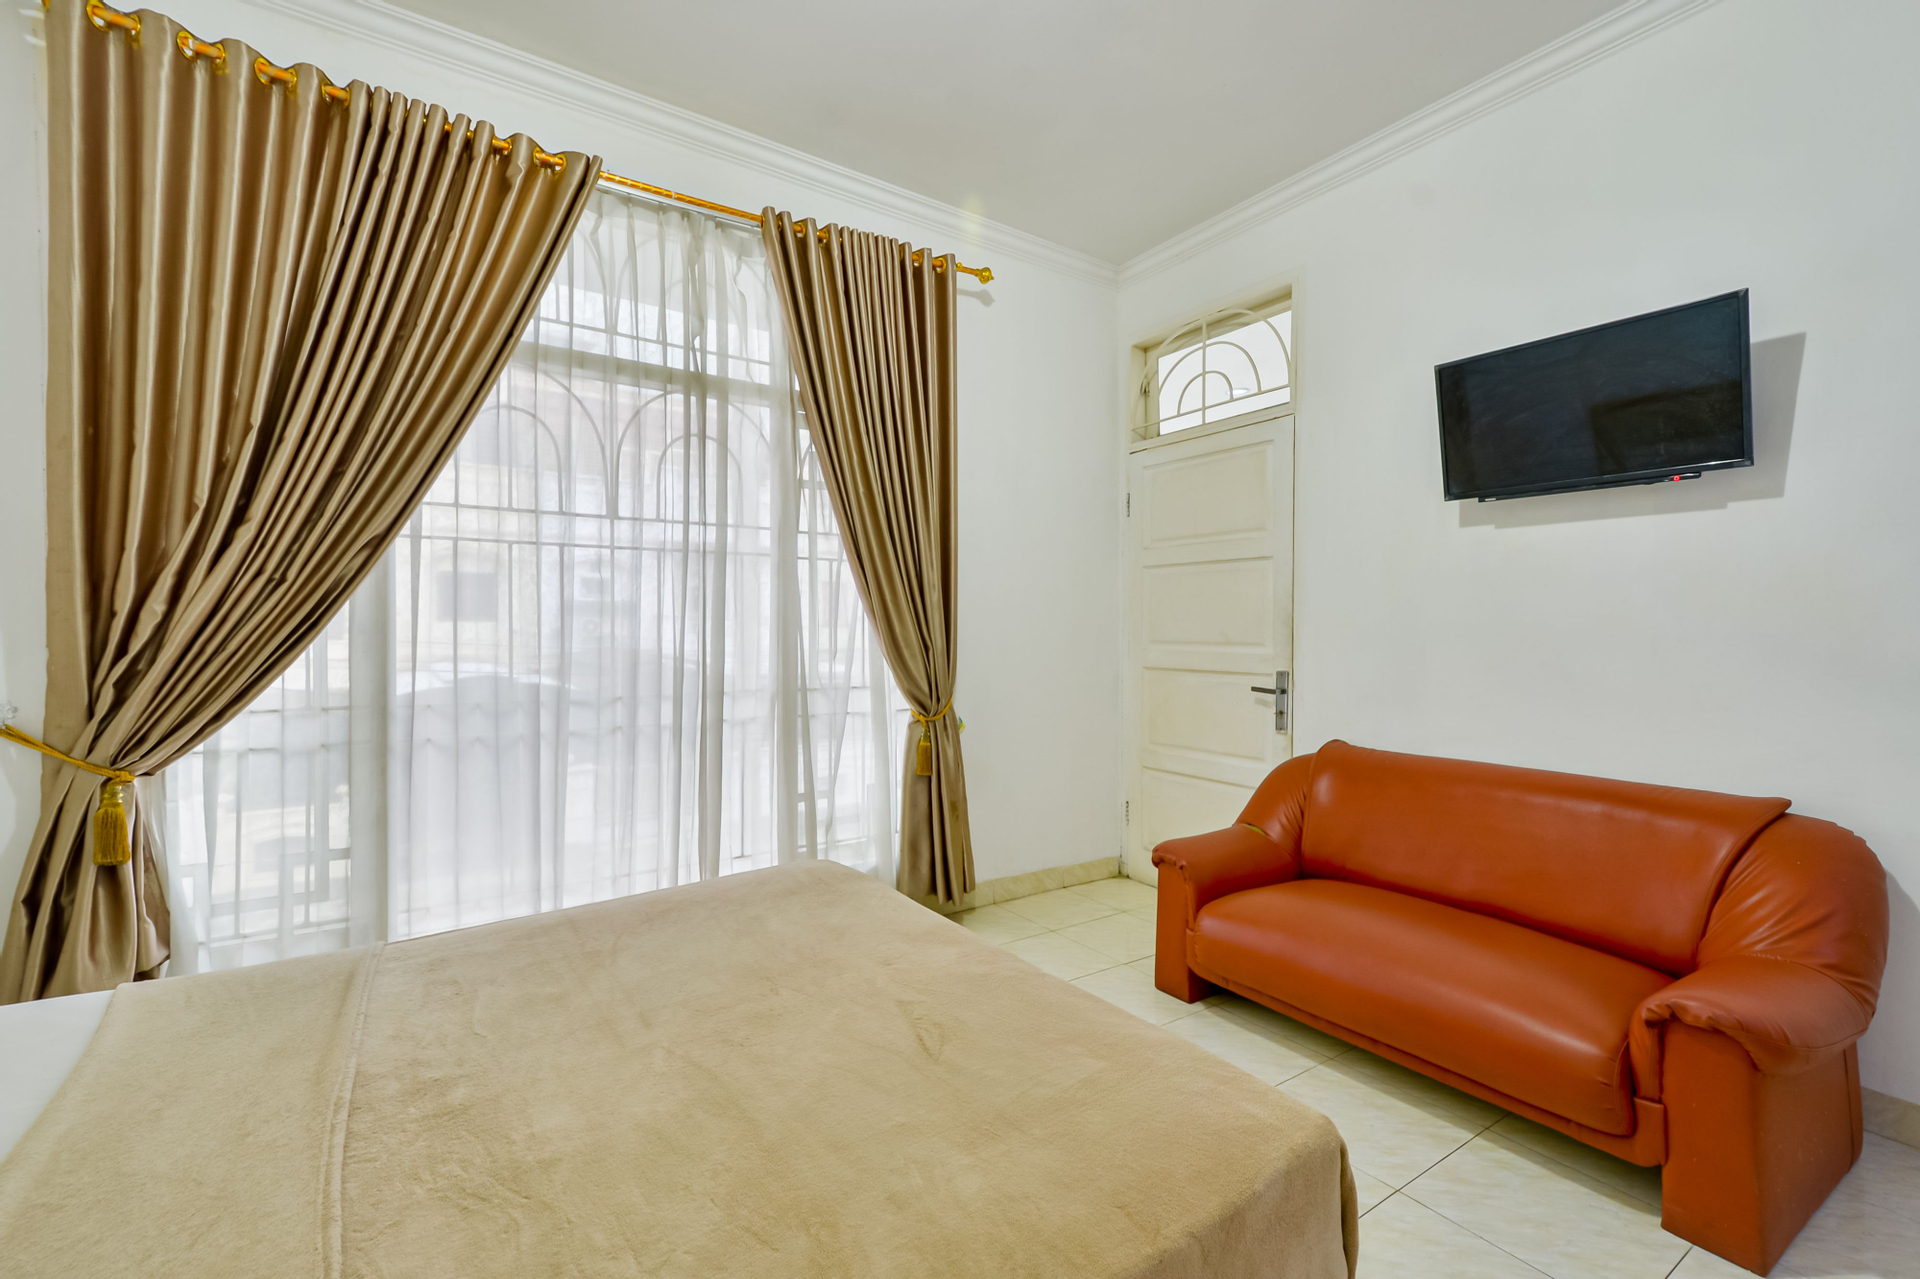 Bedroom 4, New Residence Mojopahit, Medan